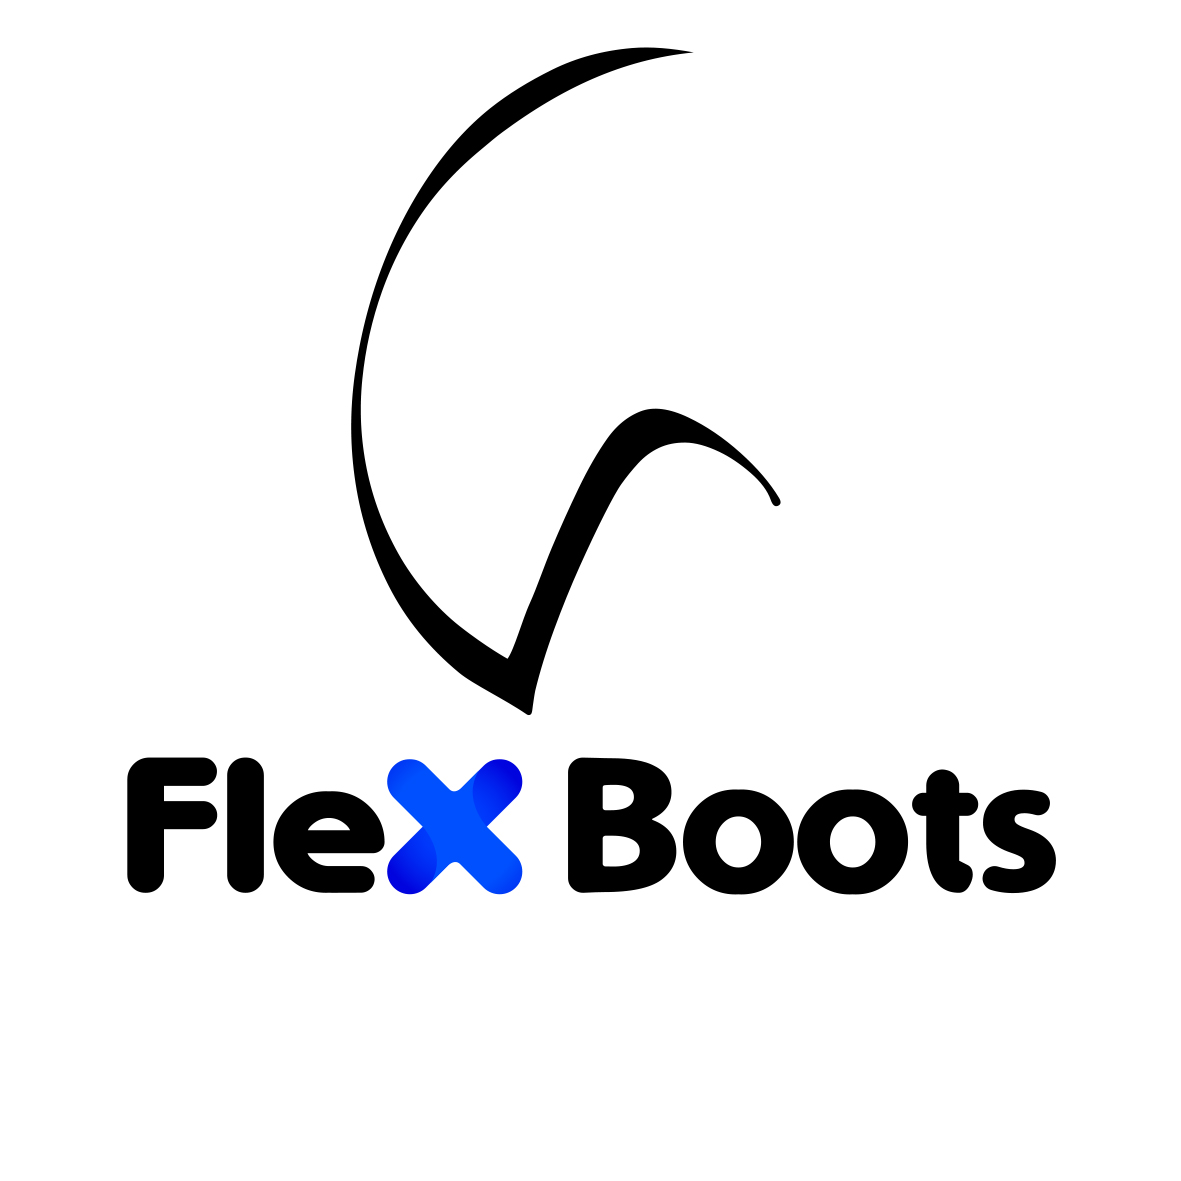 Flexhoof Boots